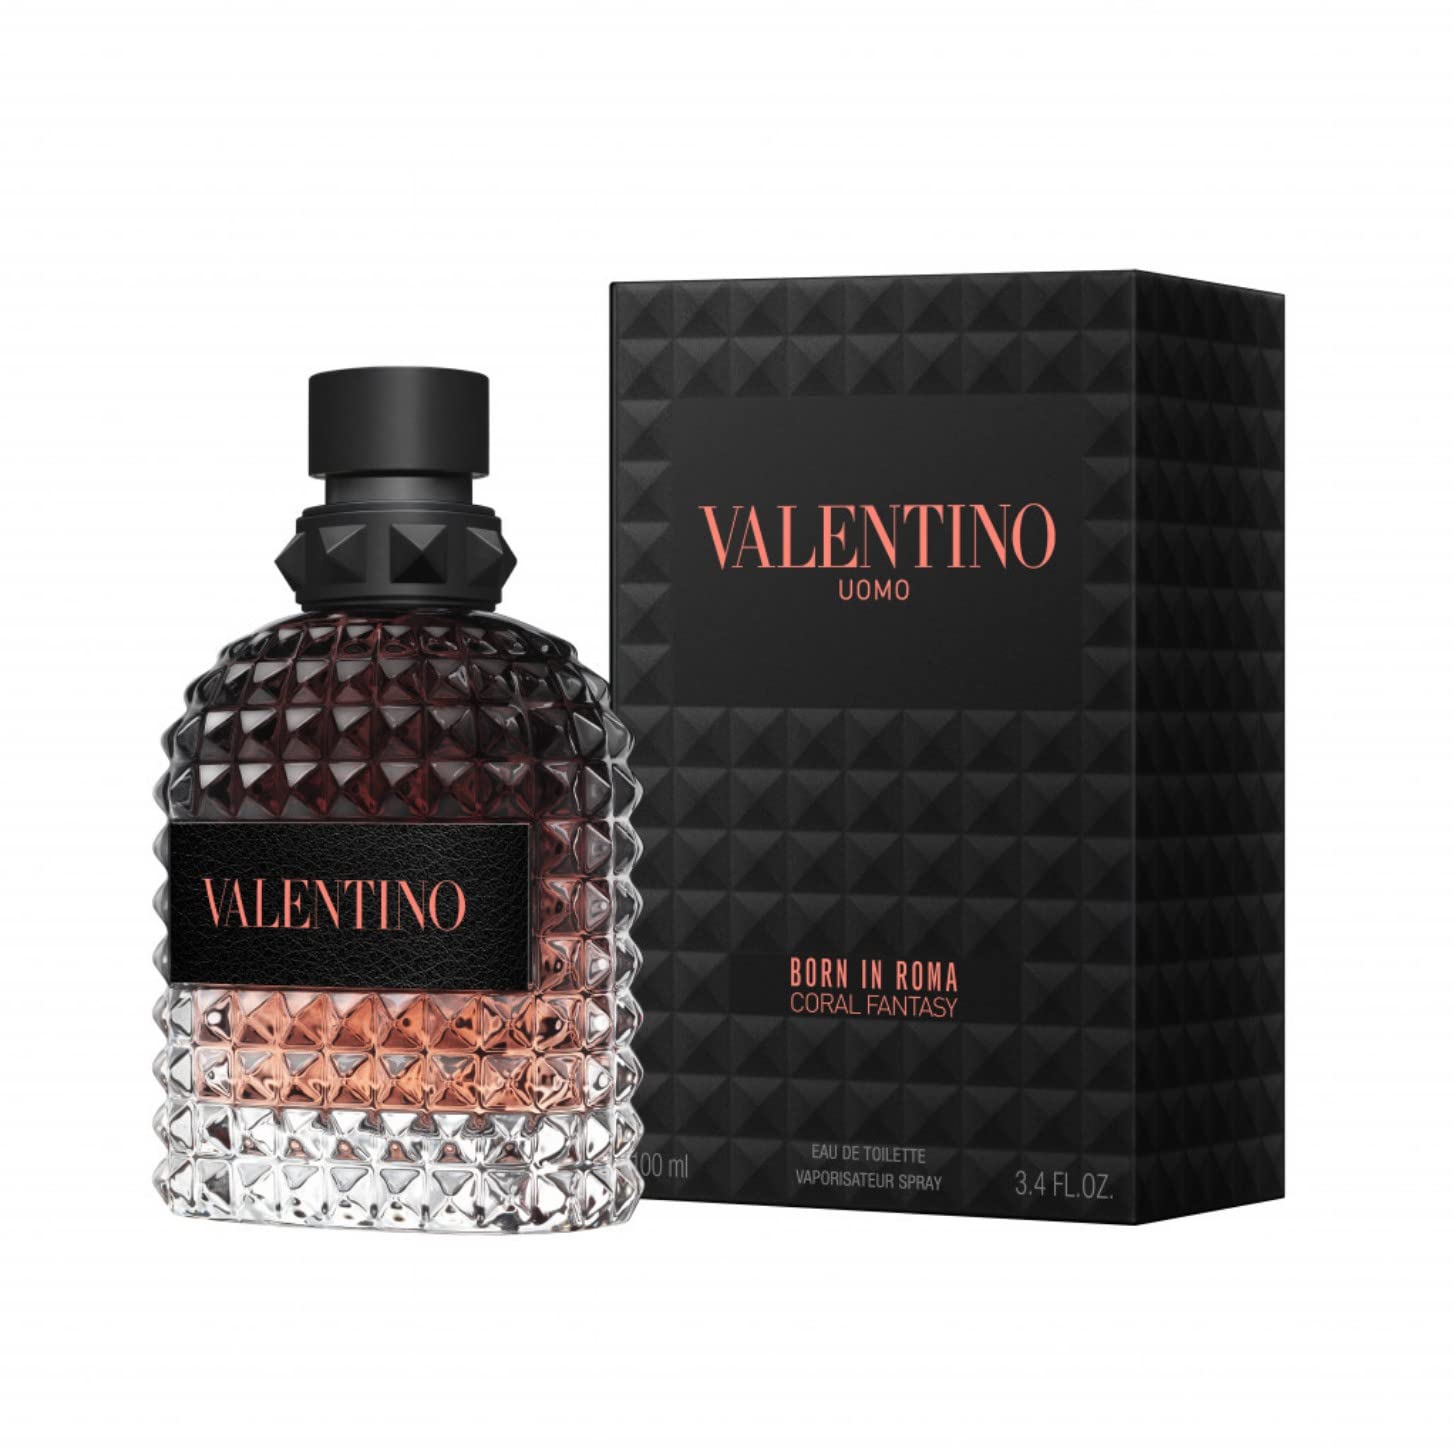 Valentino Uomo Born In Roma Coral Fantasy by Valentino 3.4 oz EDT Spray for Men